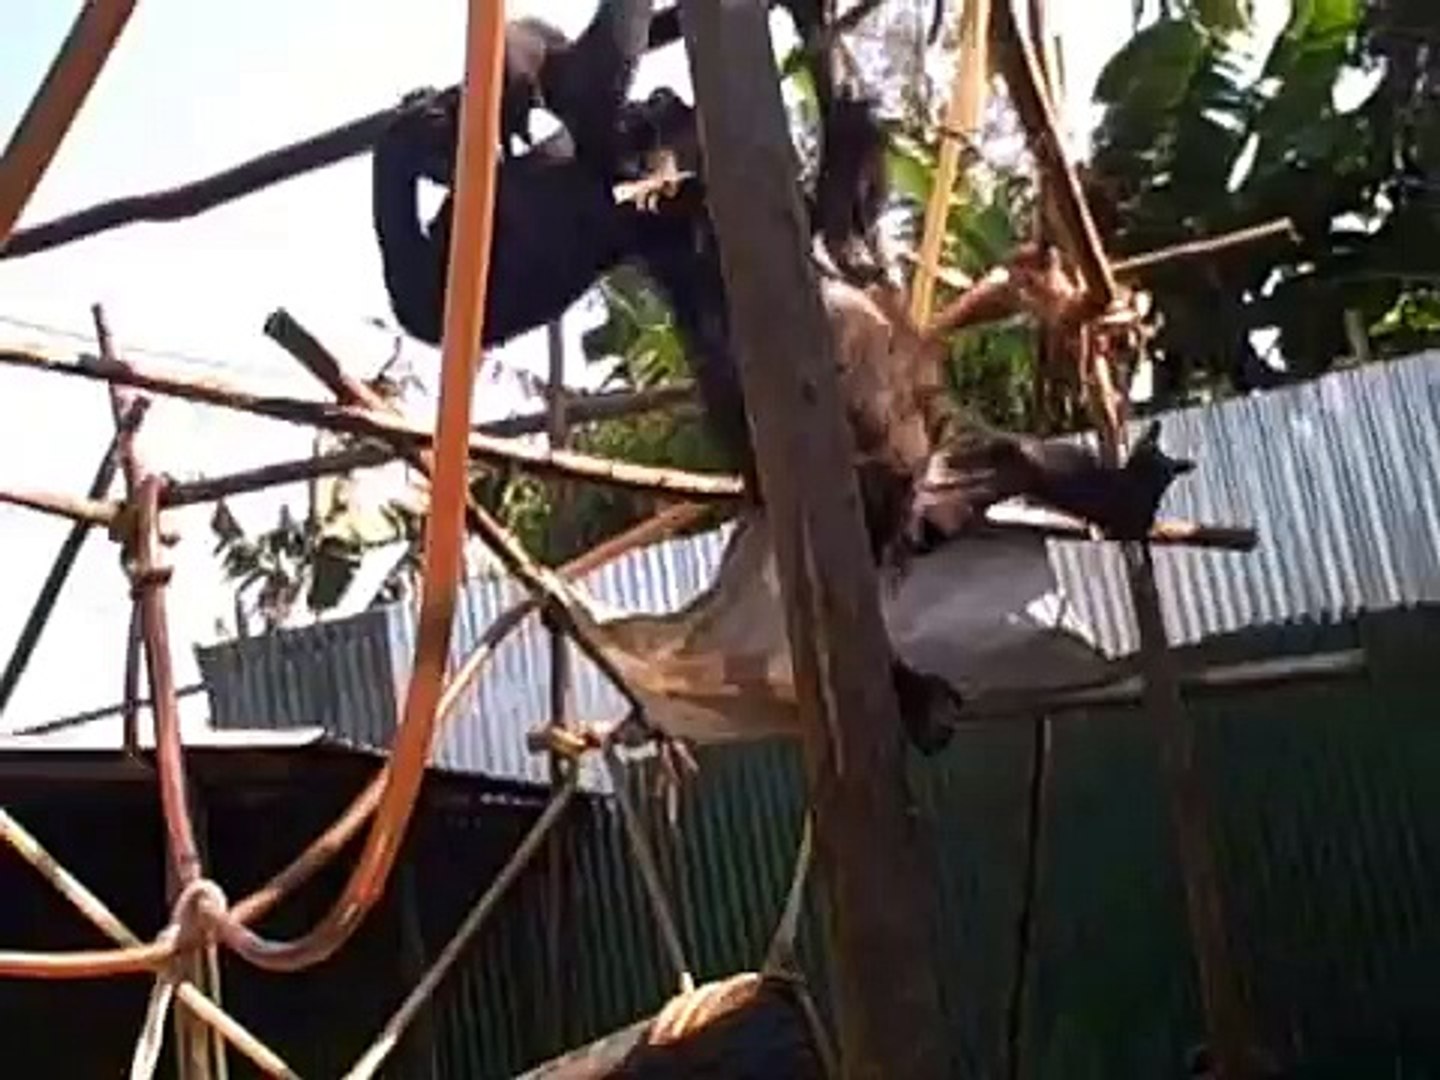 Wrestling Gorillas